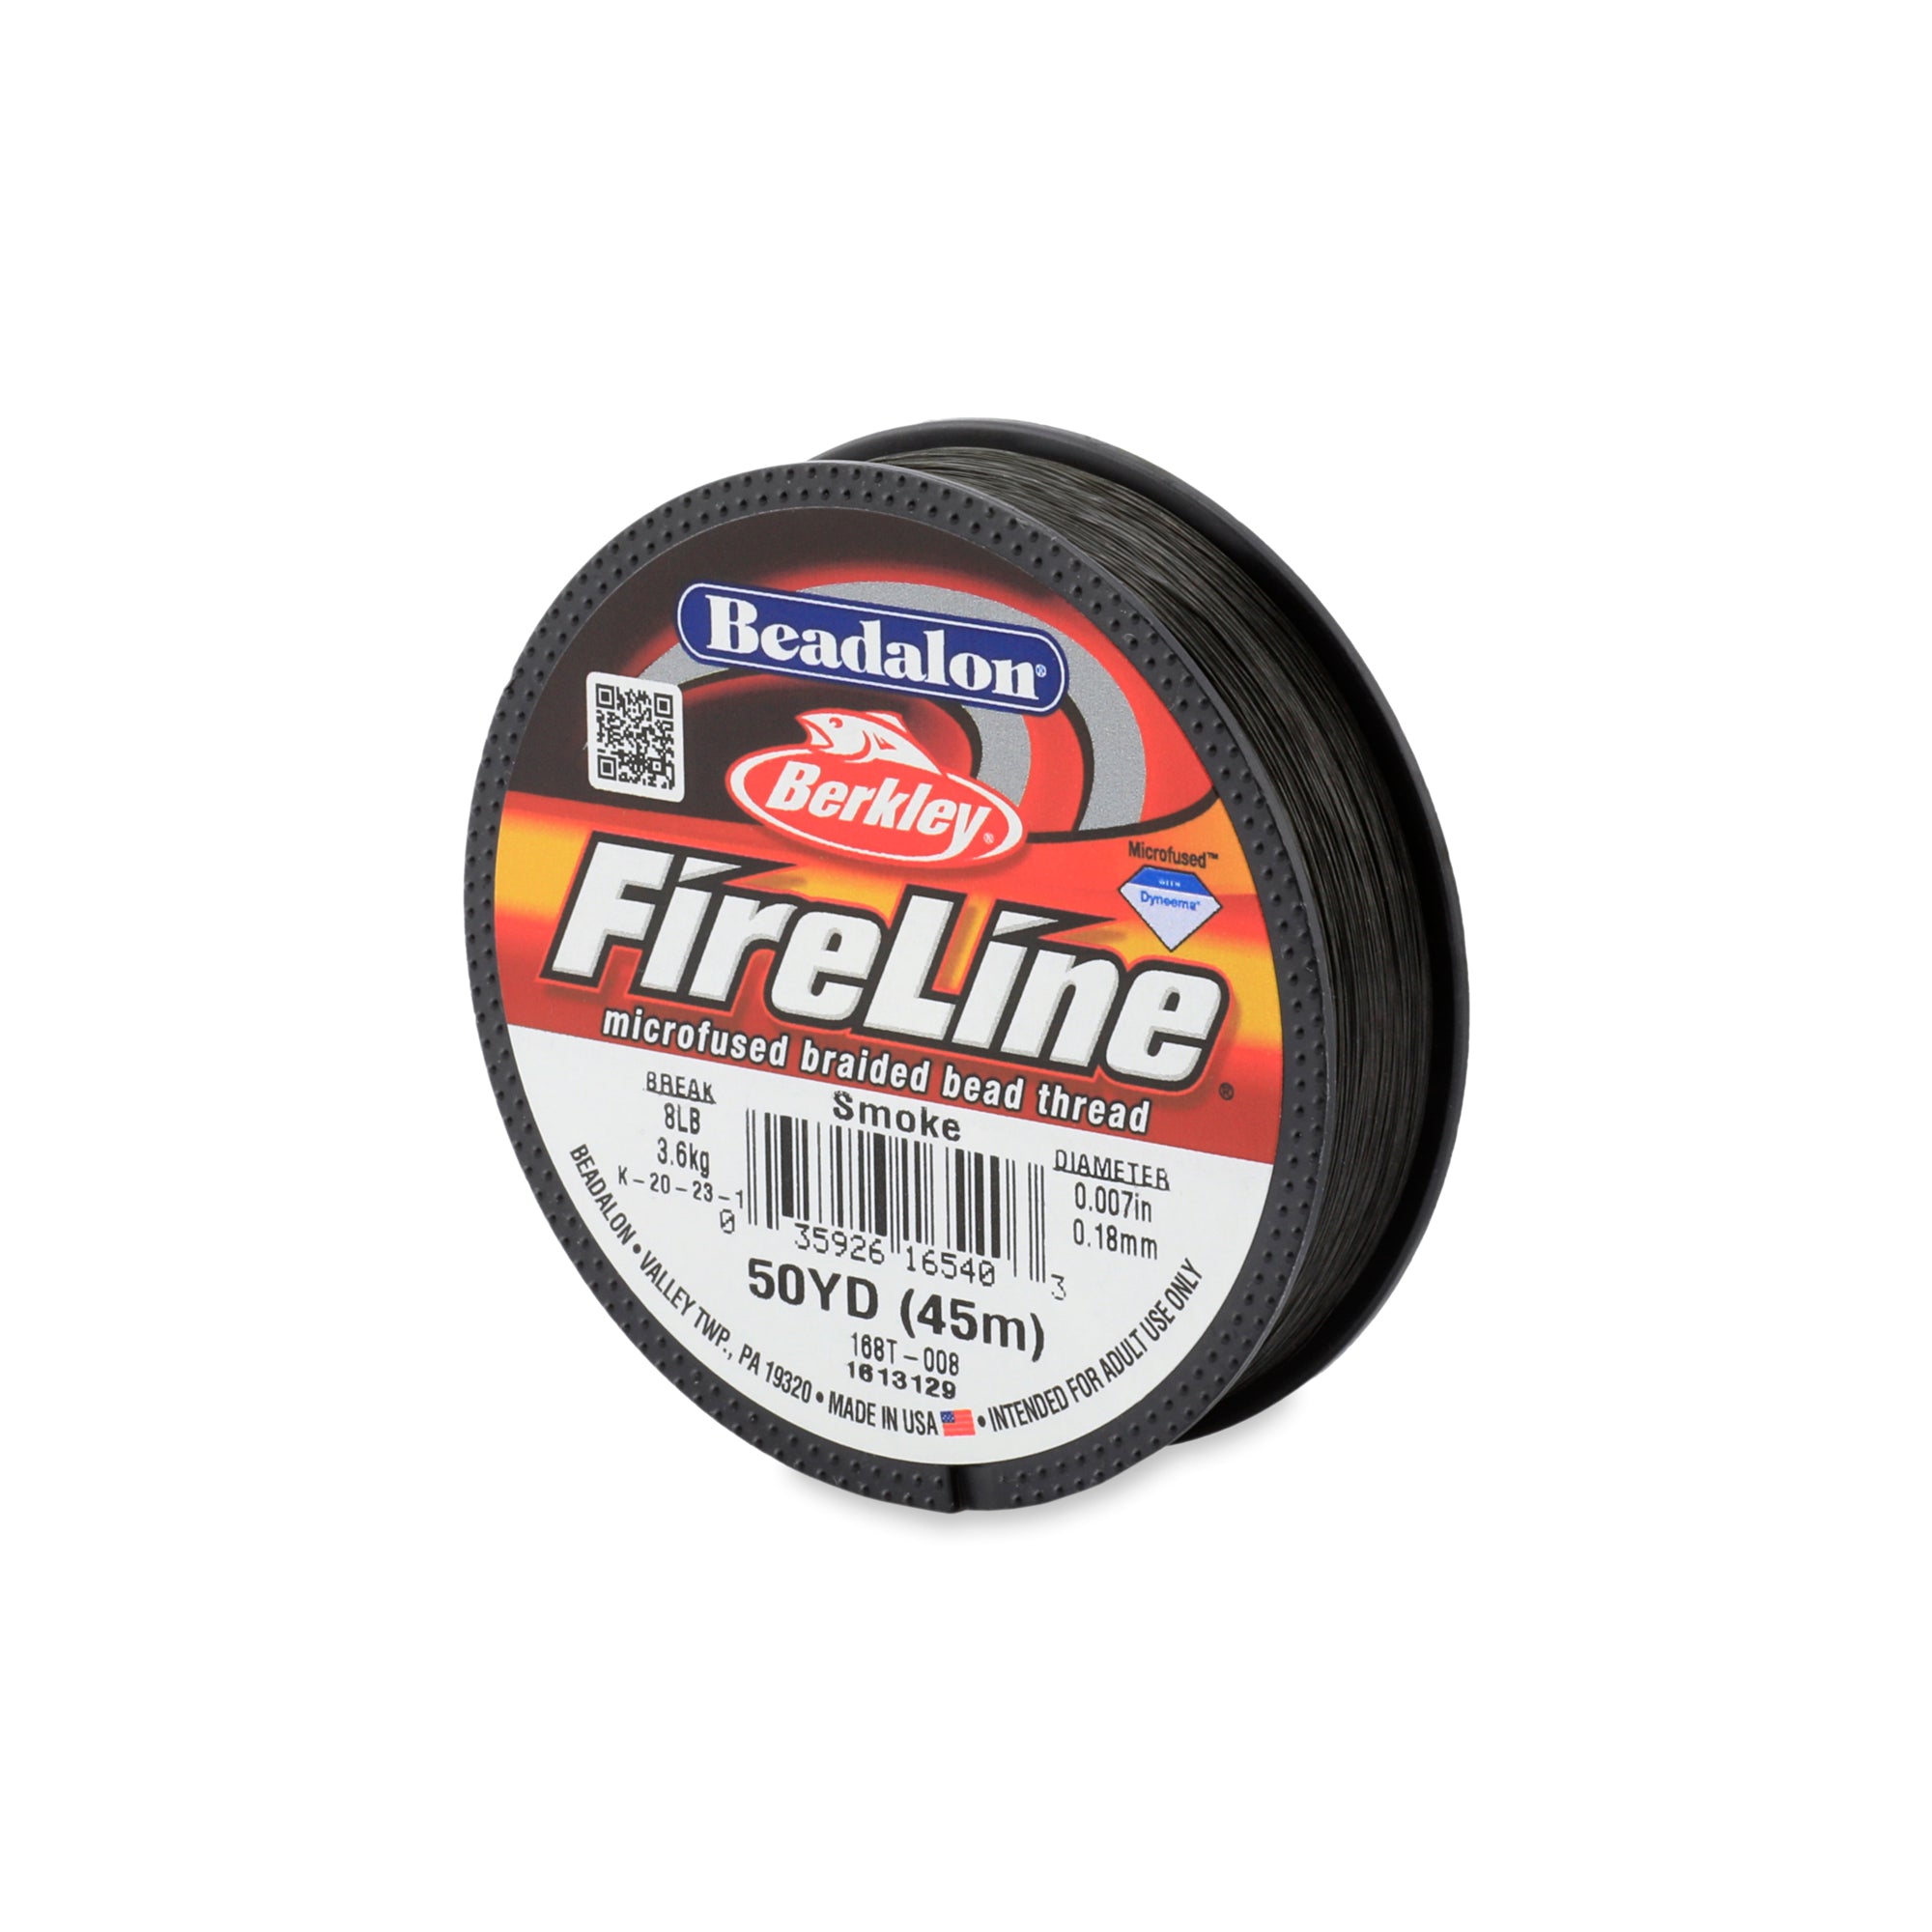 Fireline 8lb Smoke Grey 50 yards